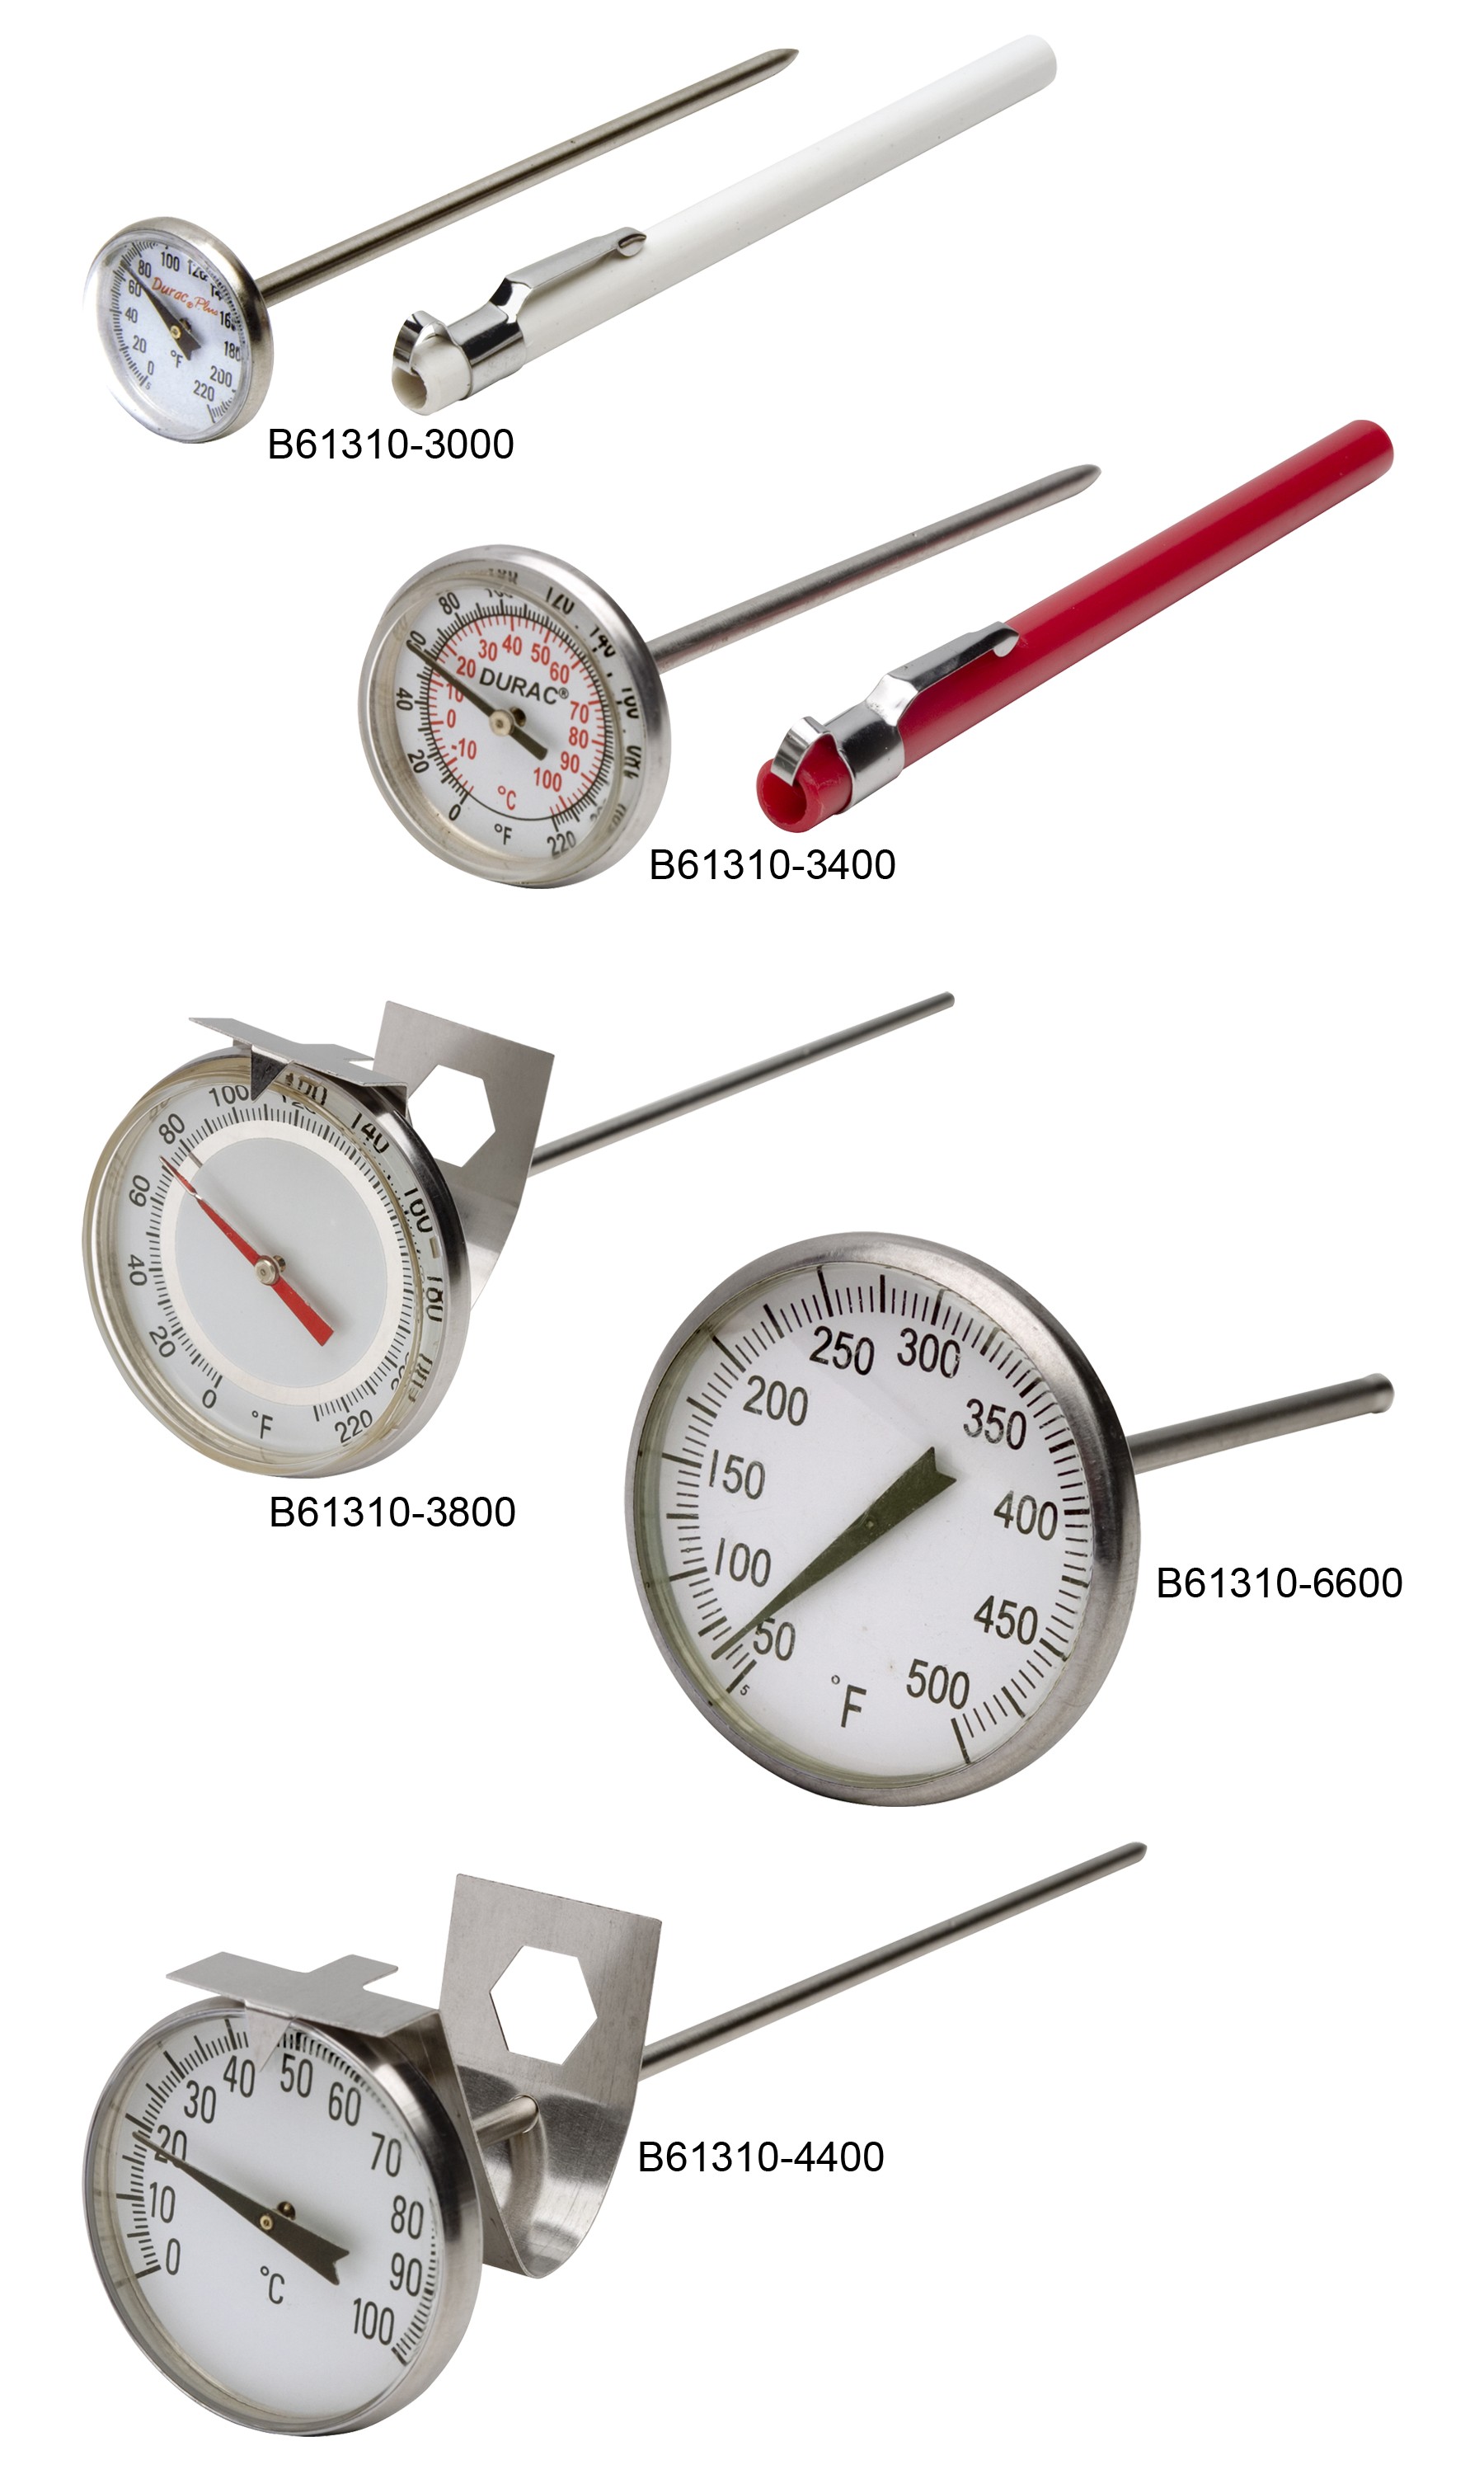 DuraChoice Industrial Bimetal Thermometer 3 Face x 6 Stem, 50-500 w/Calibration Dial